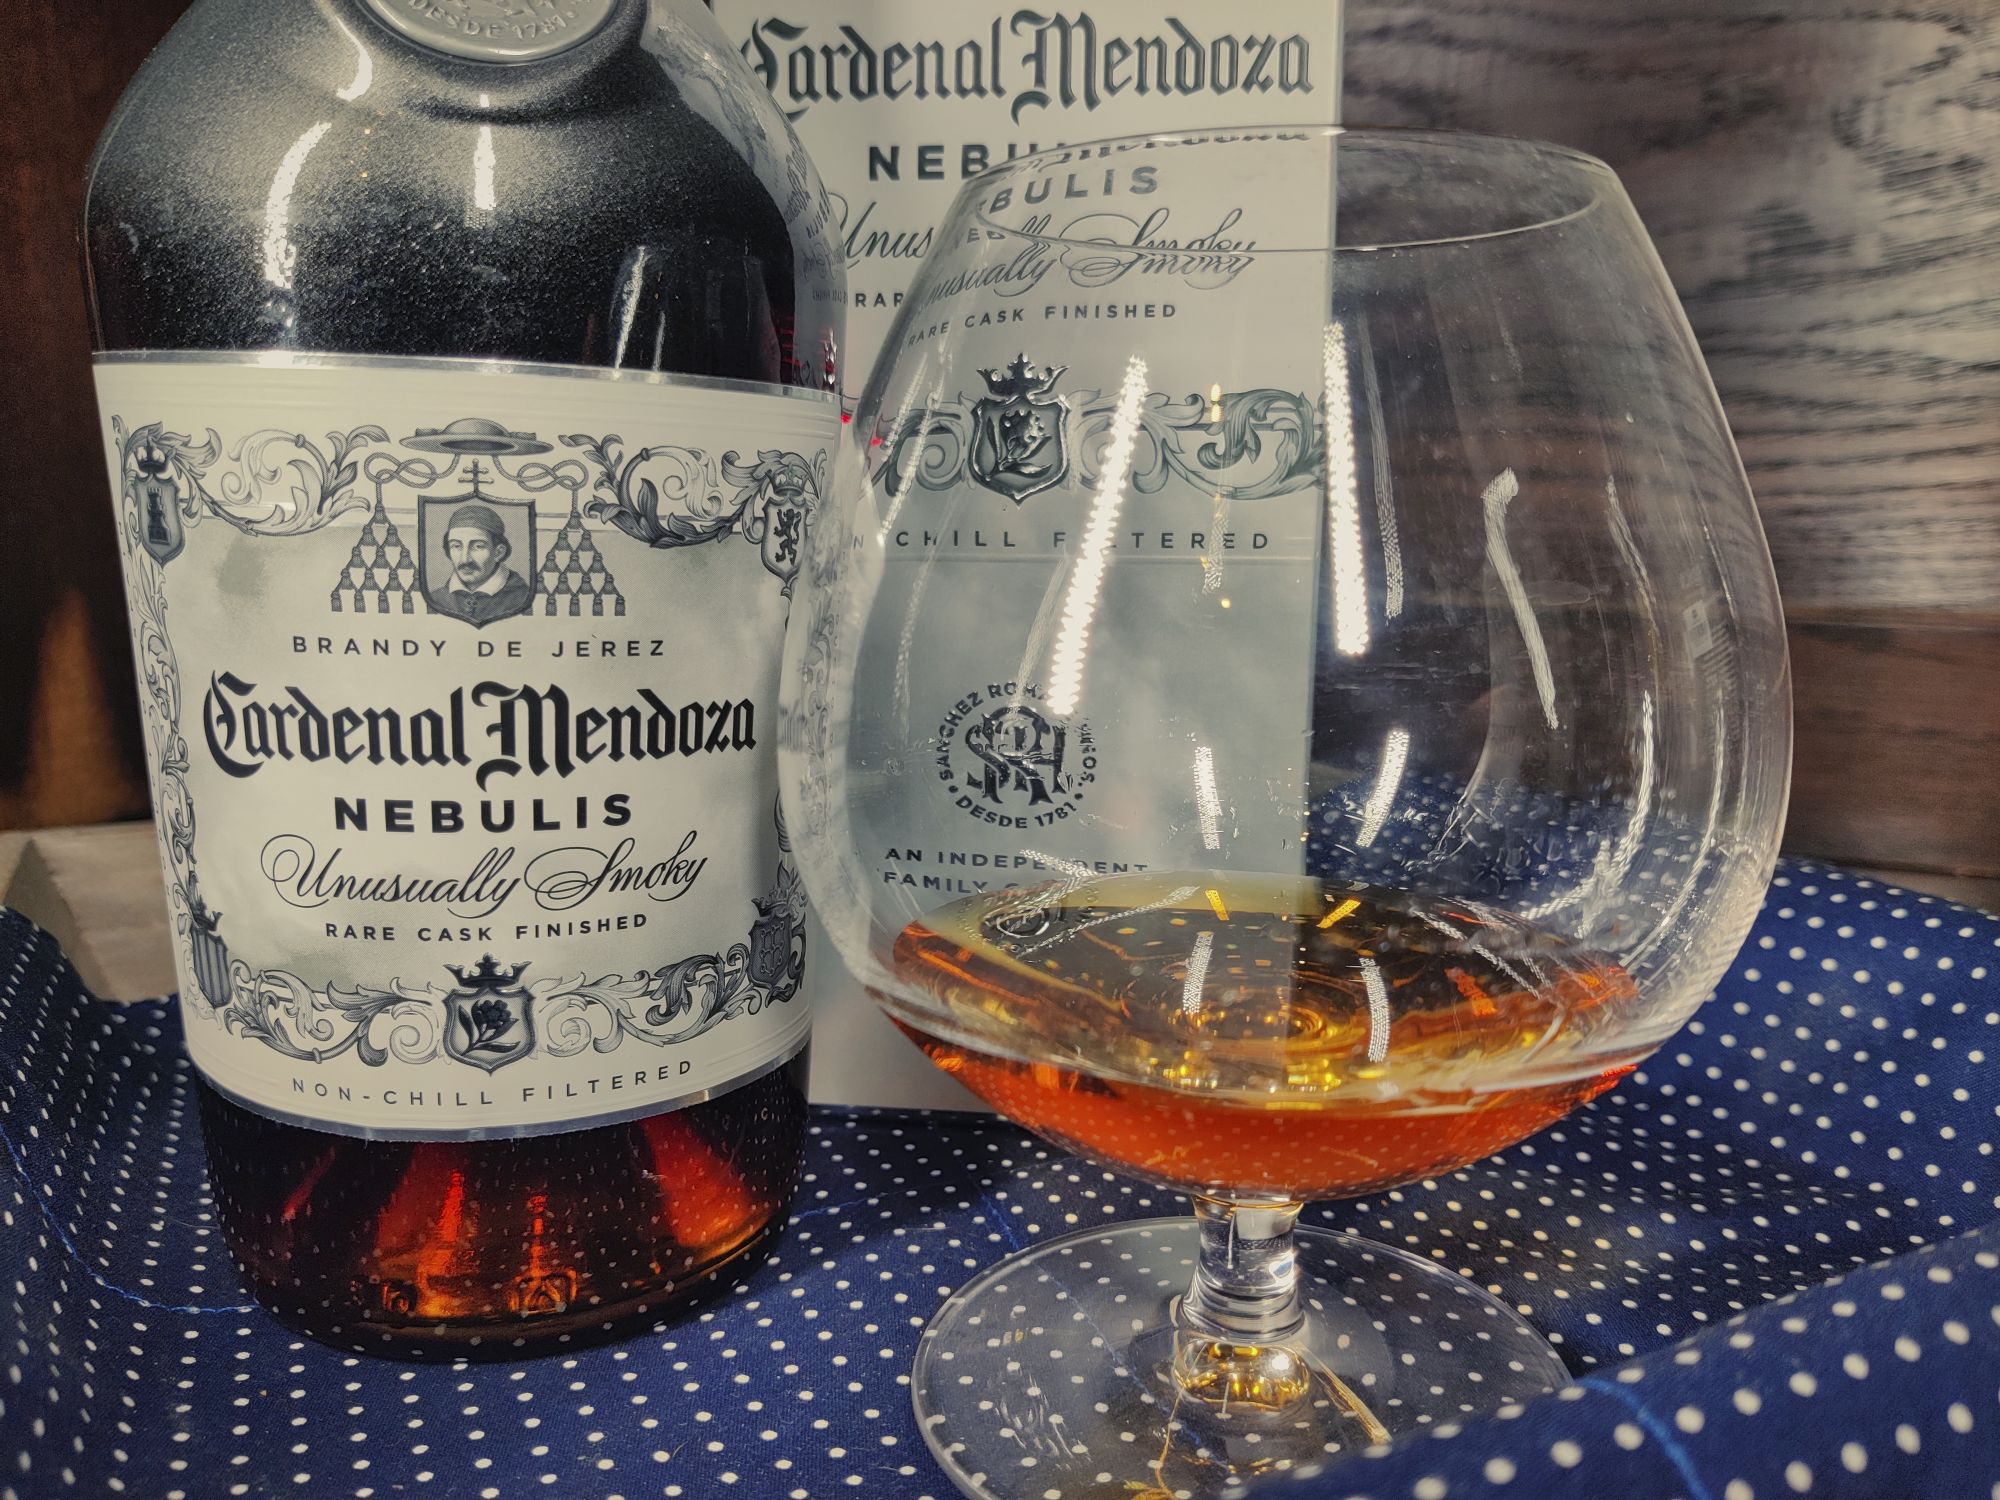 Cardenal Mendoza Nebulis - Brandy de Jerez